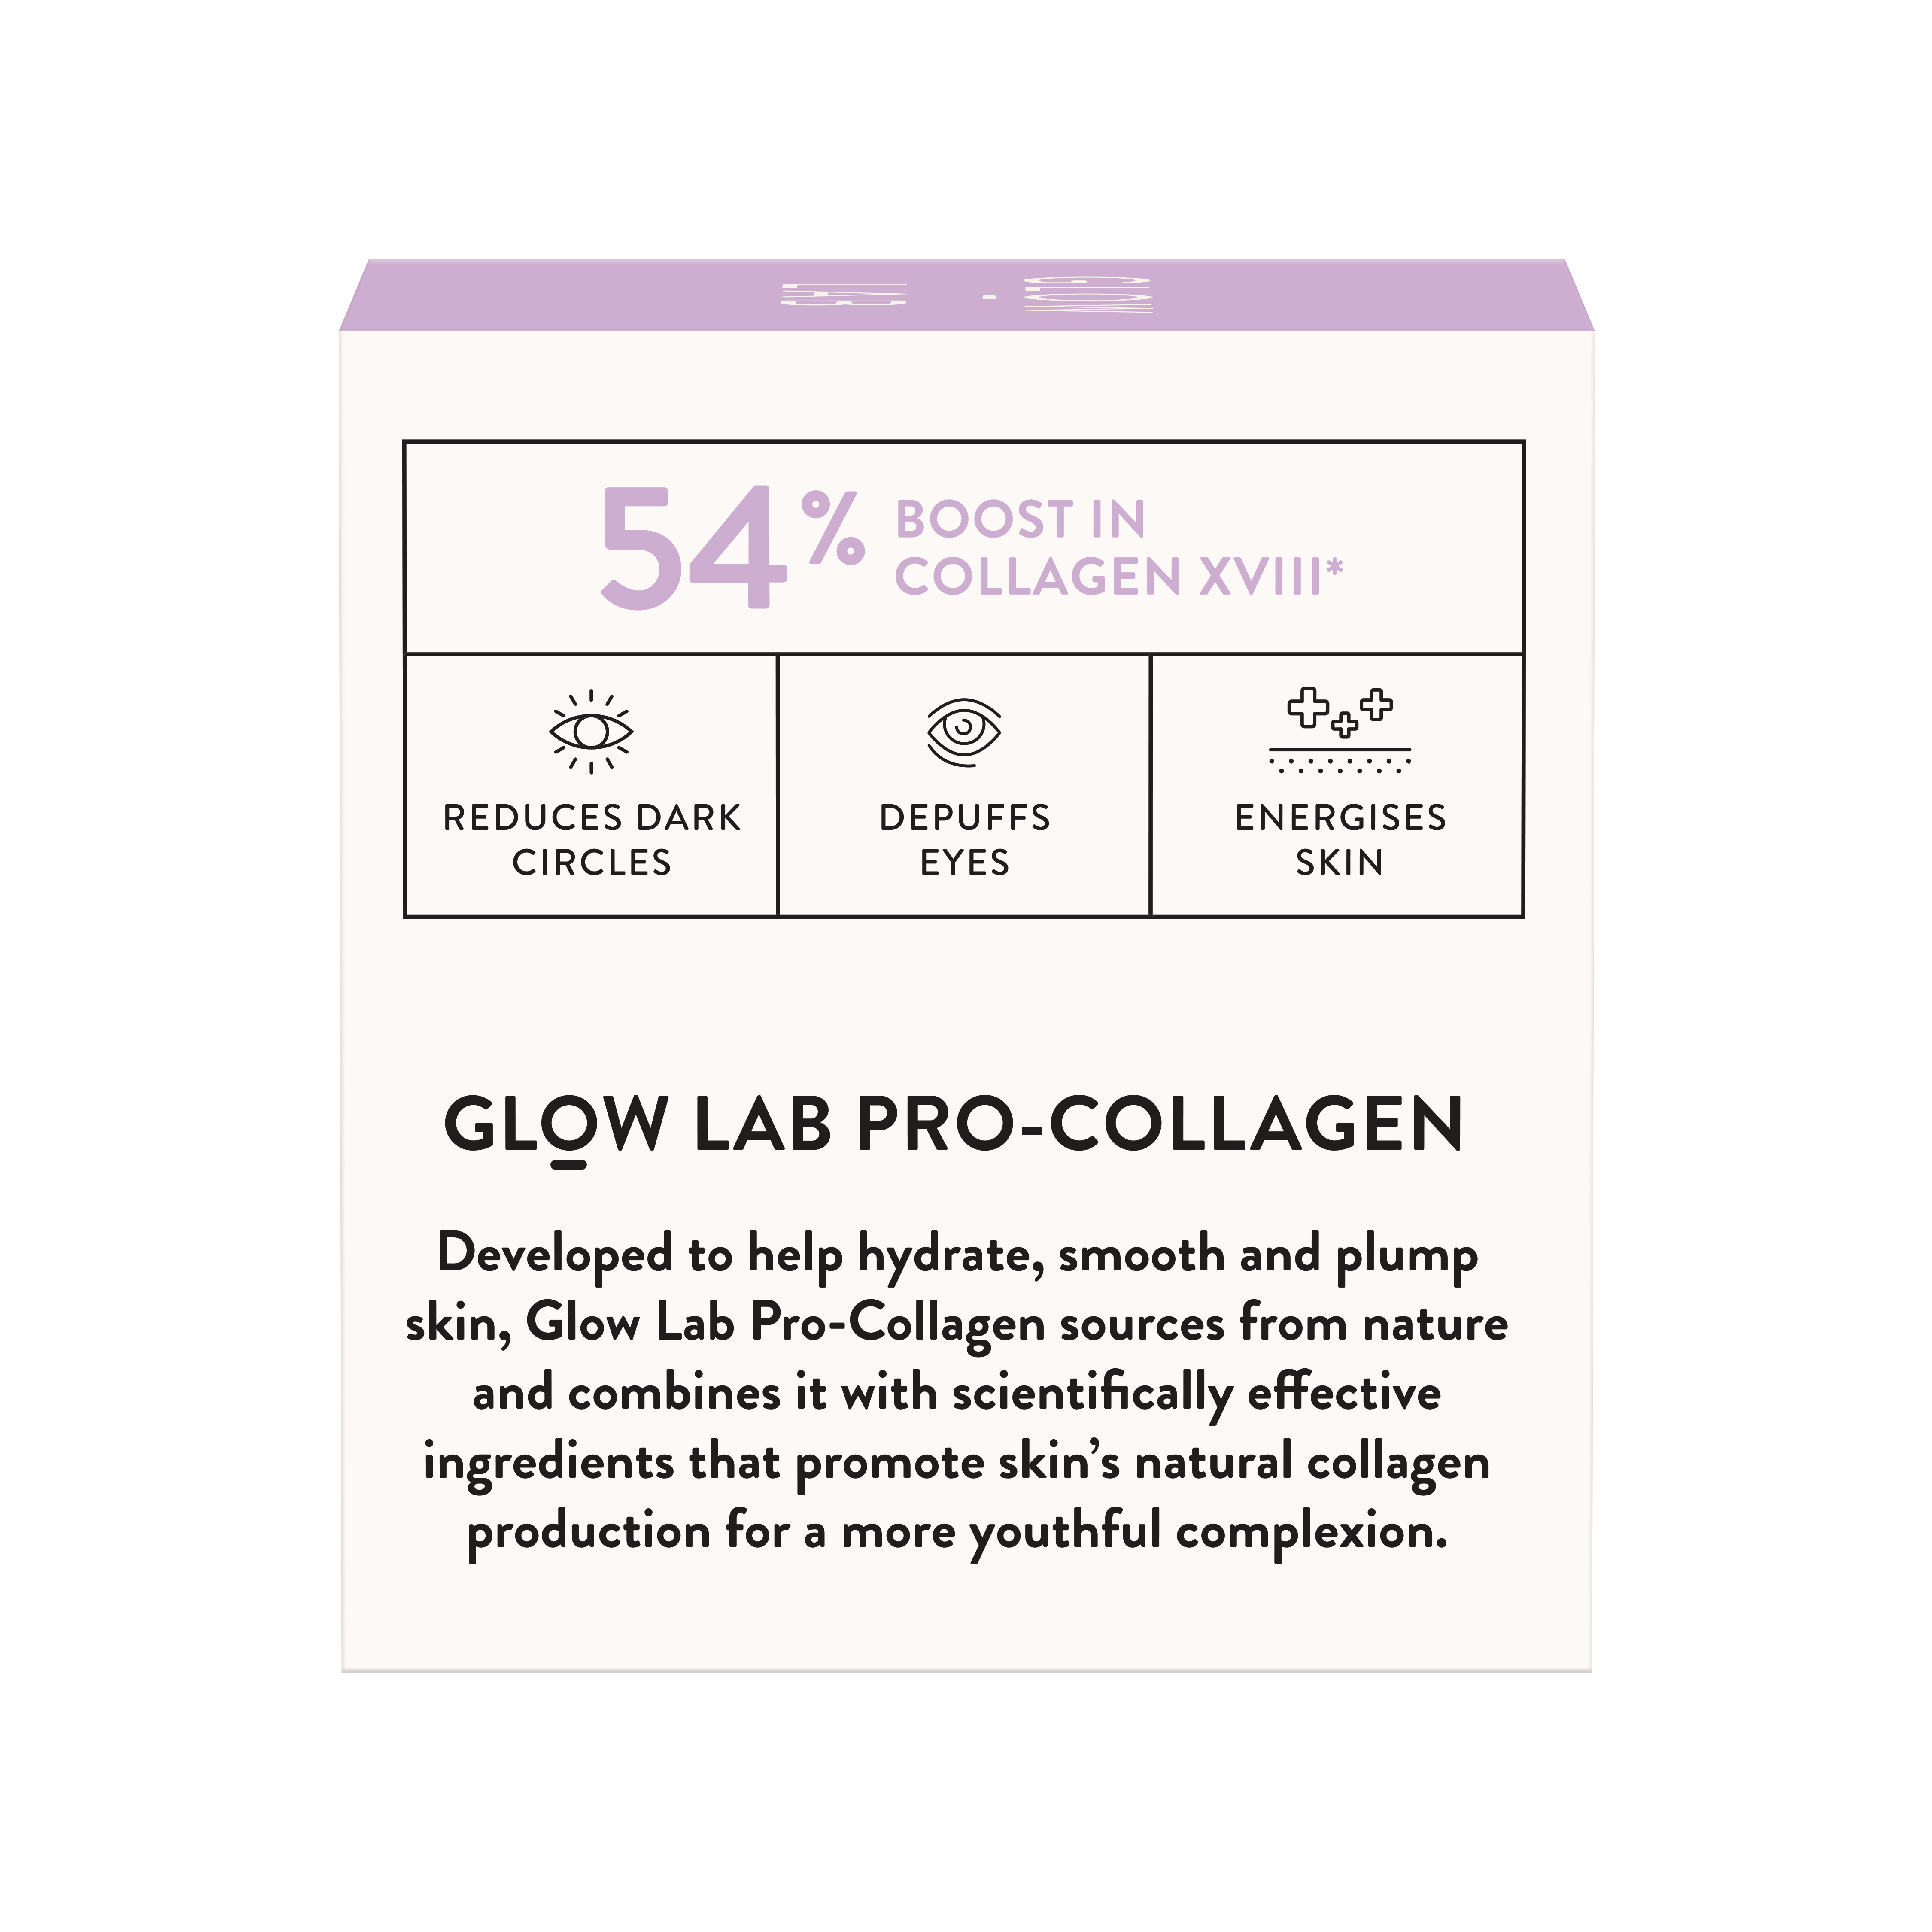 Pro-collagen Lifting Eye cream 